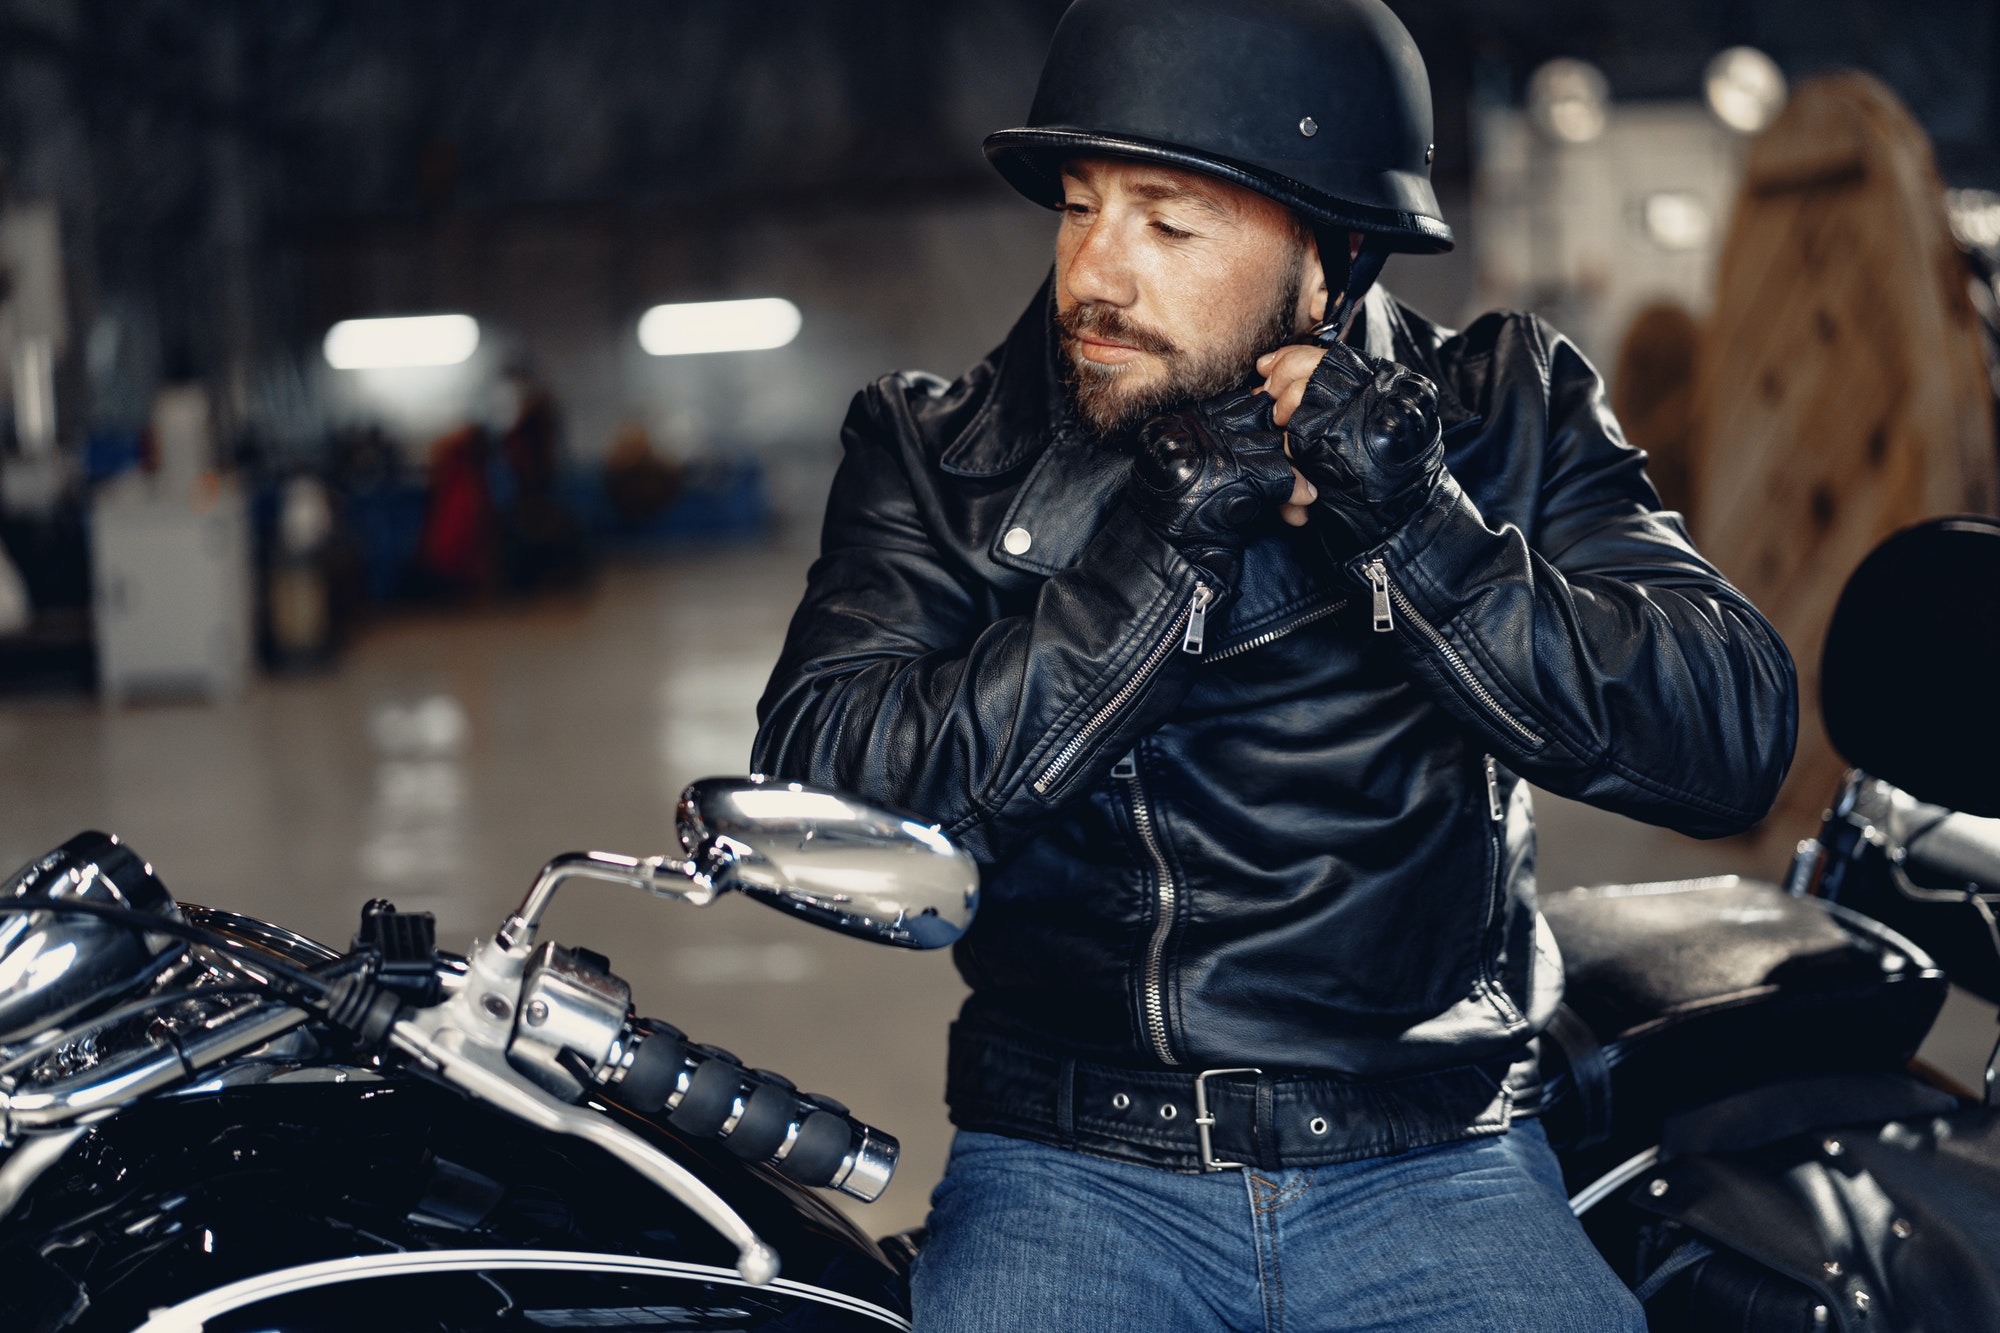 Biker man in leather jacket and helmet sitting on his motorcycle